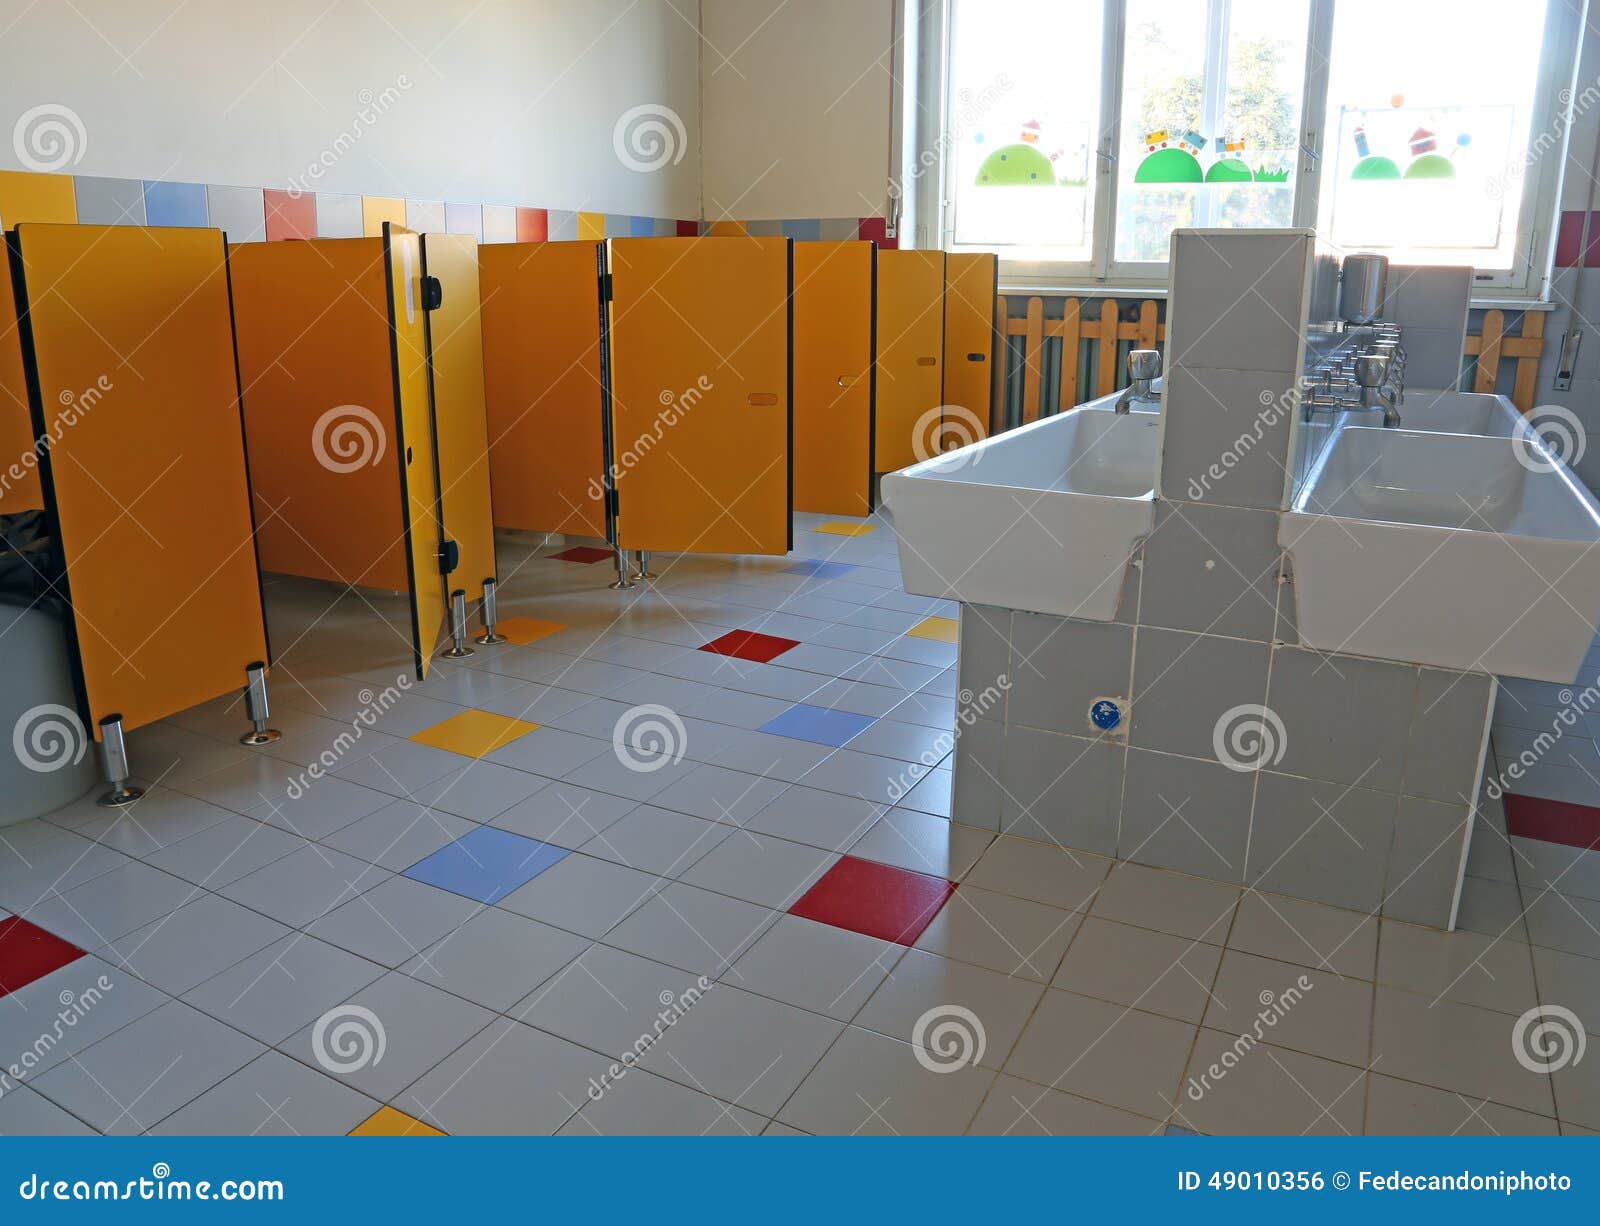 bathroom of the nursery school